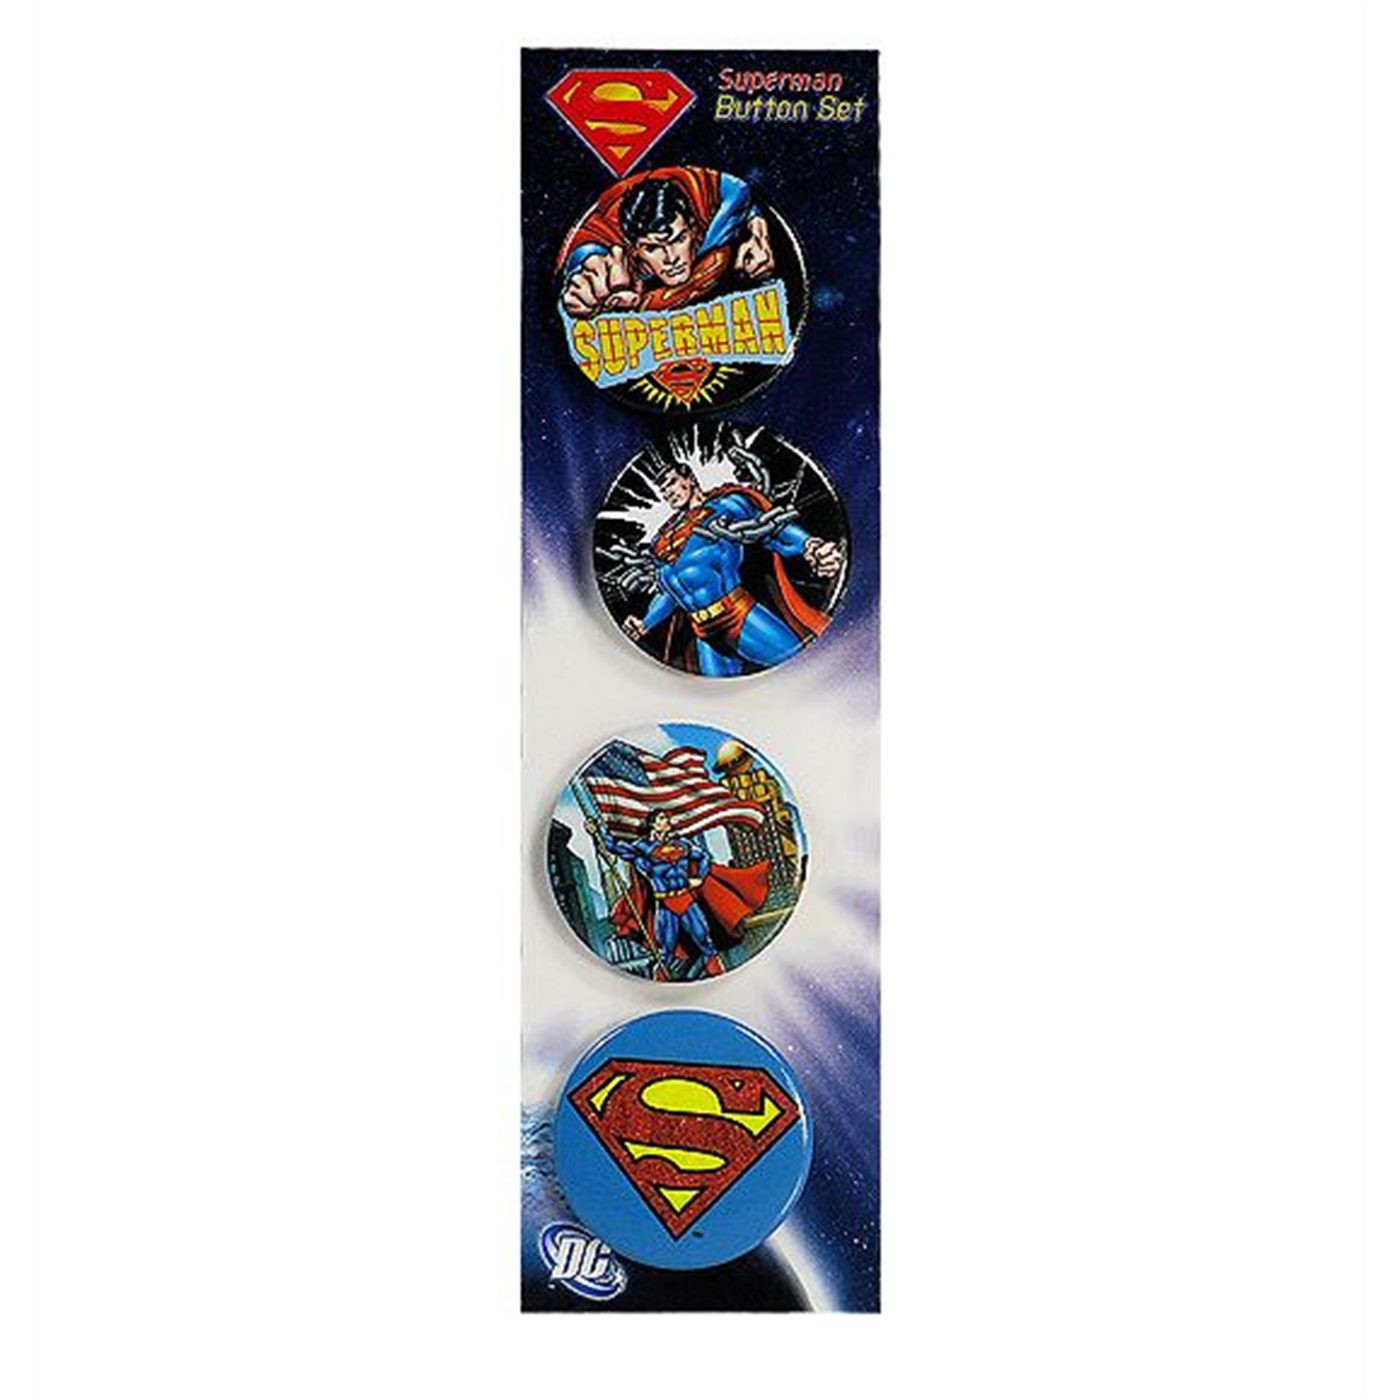 Superman Images and Symbol Button Set